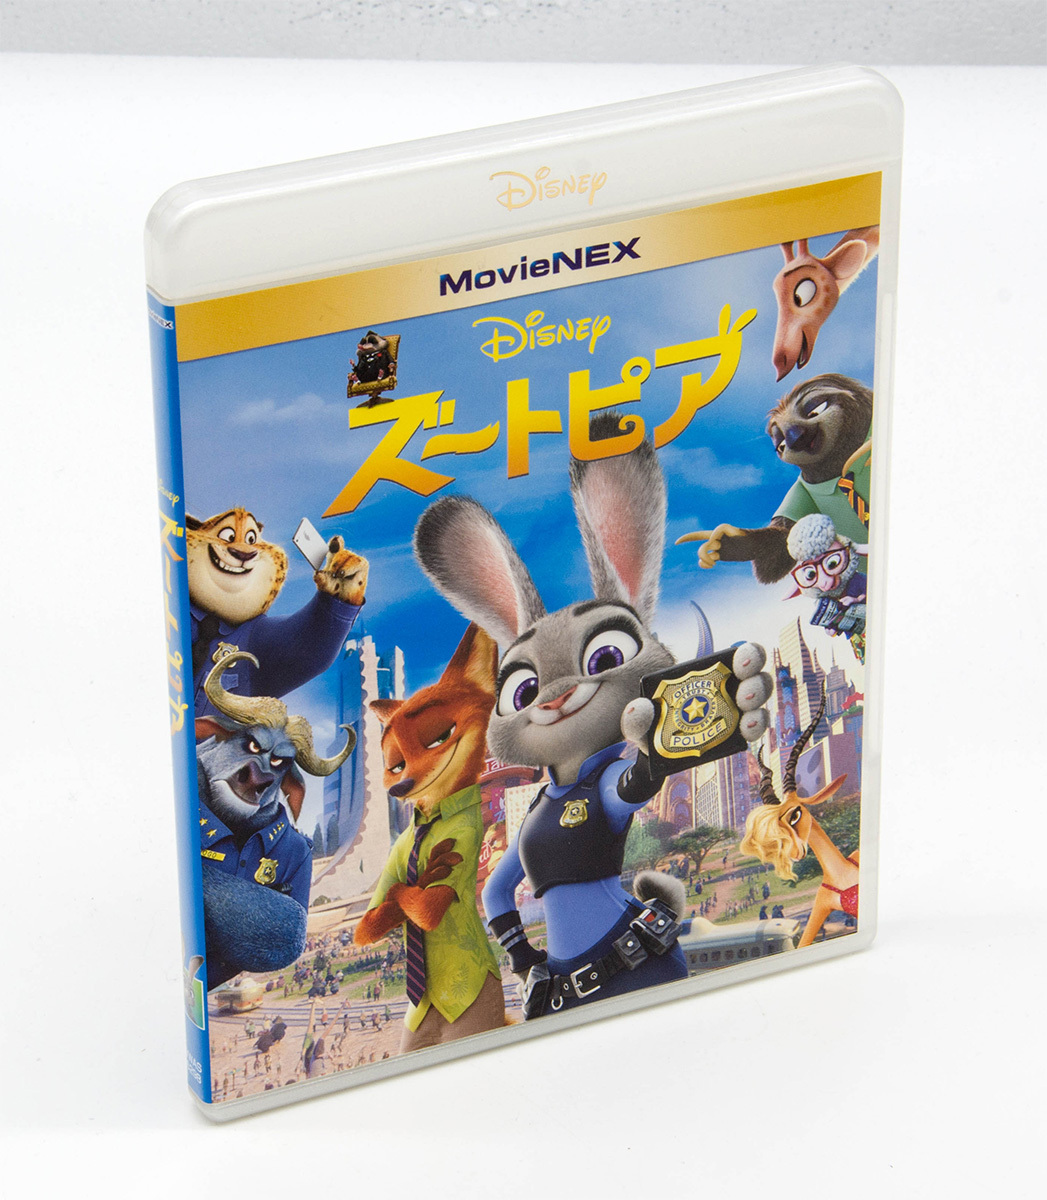 Disney ズートピア MovieNEX Zootopia ブルーレイ Blu-ray DVD 中古 セル版 DVDなし_画像1